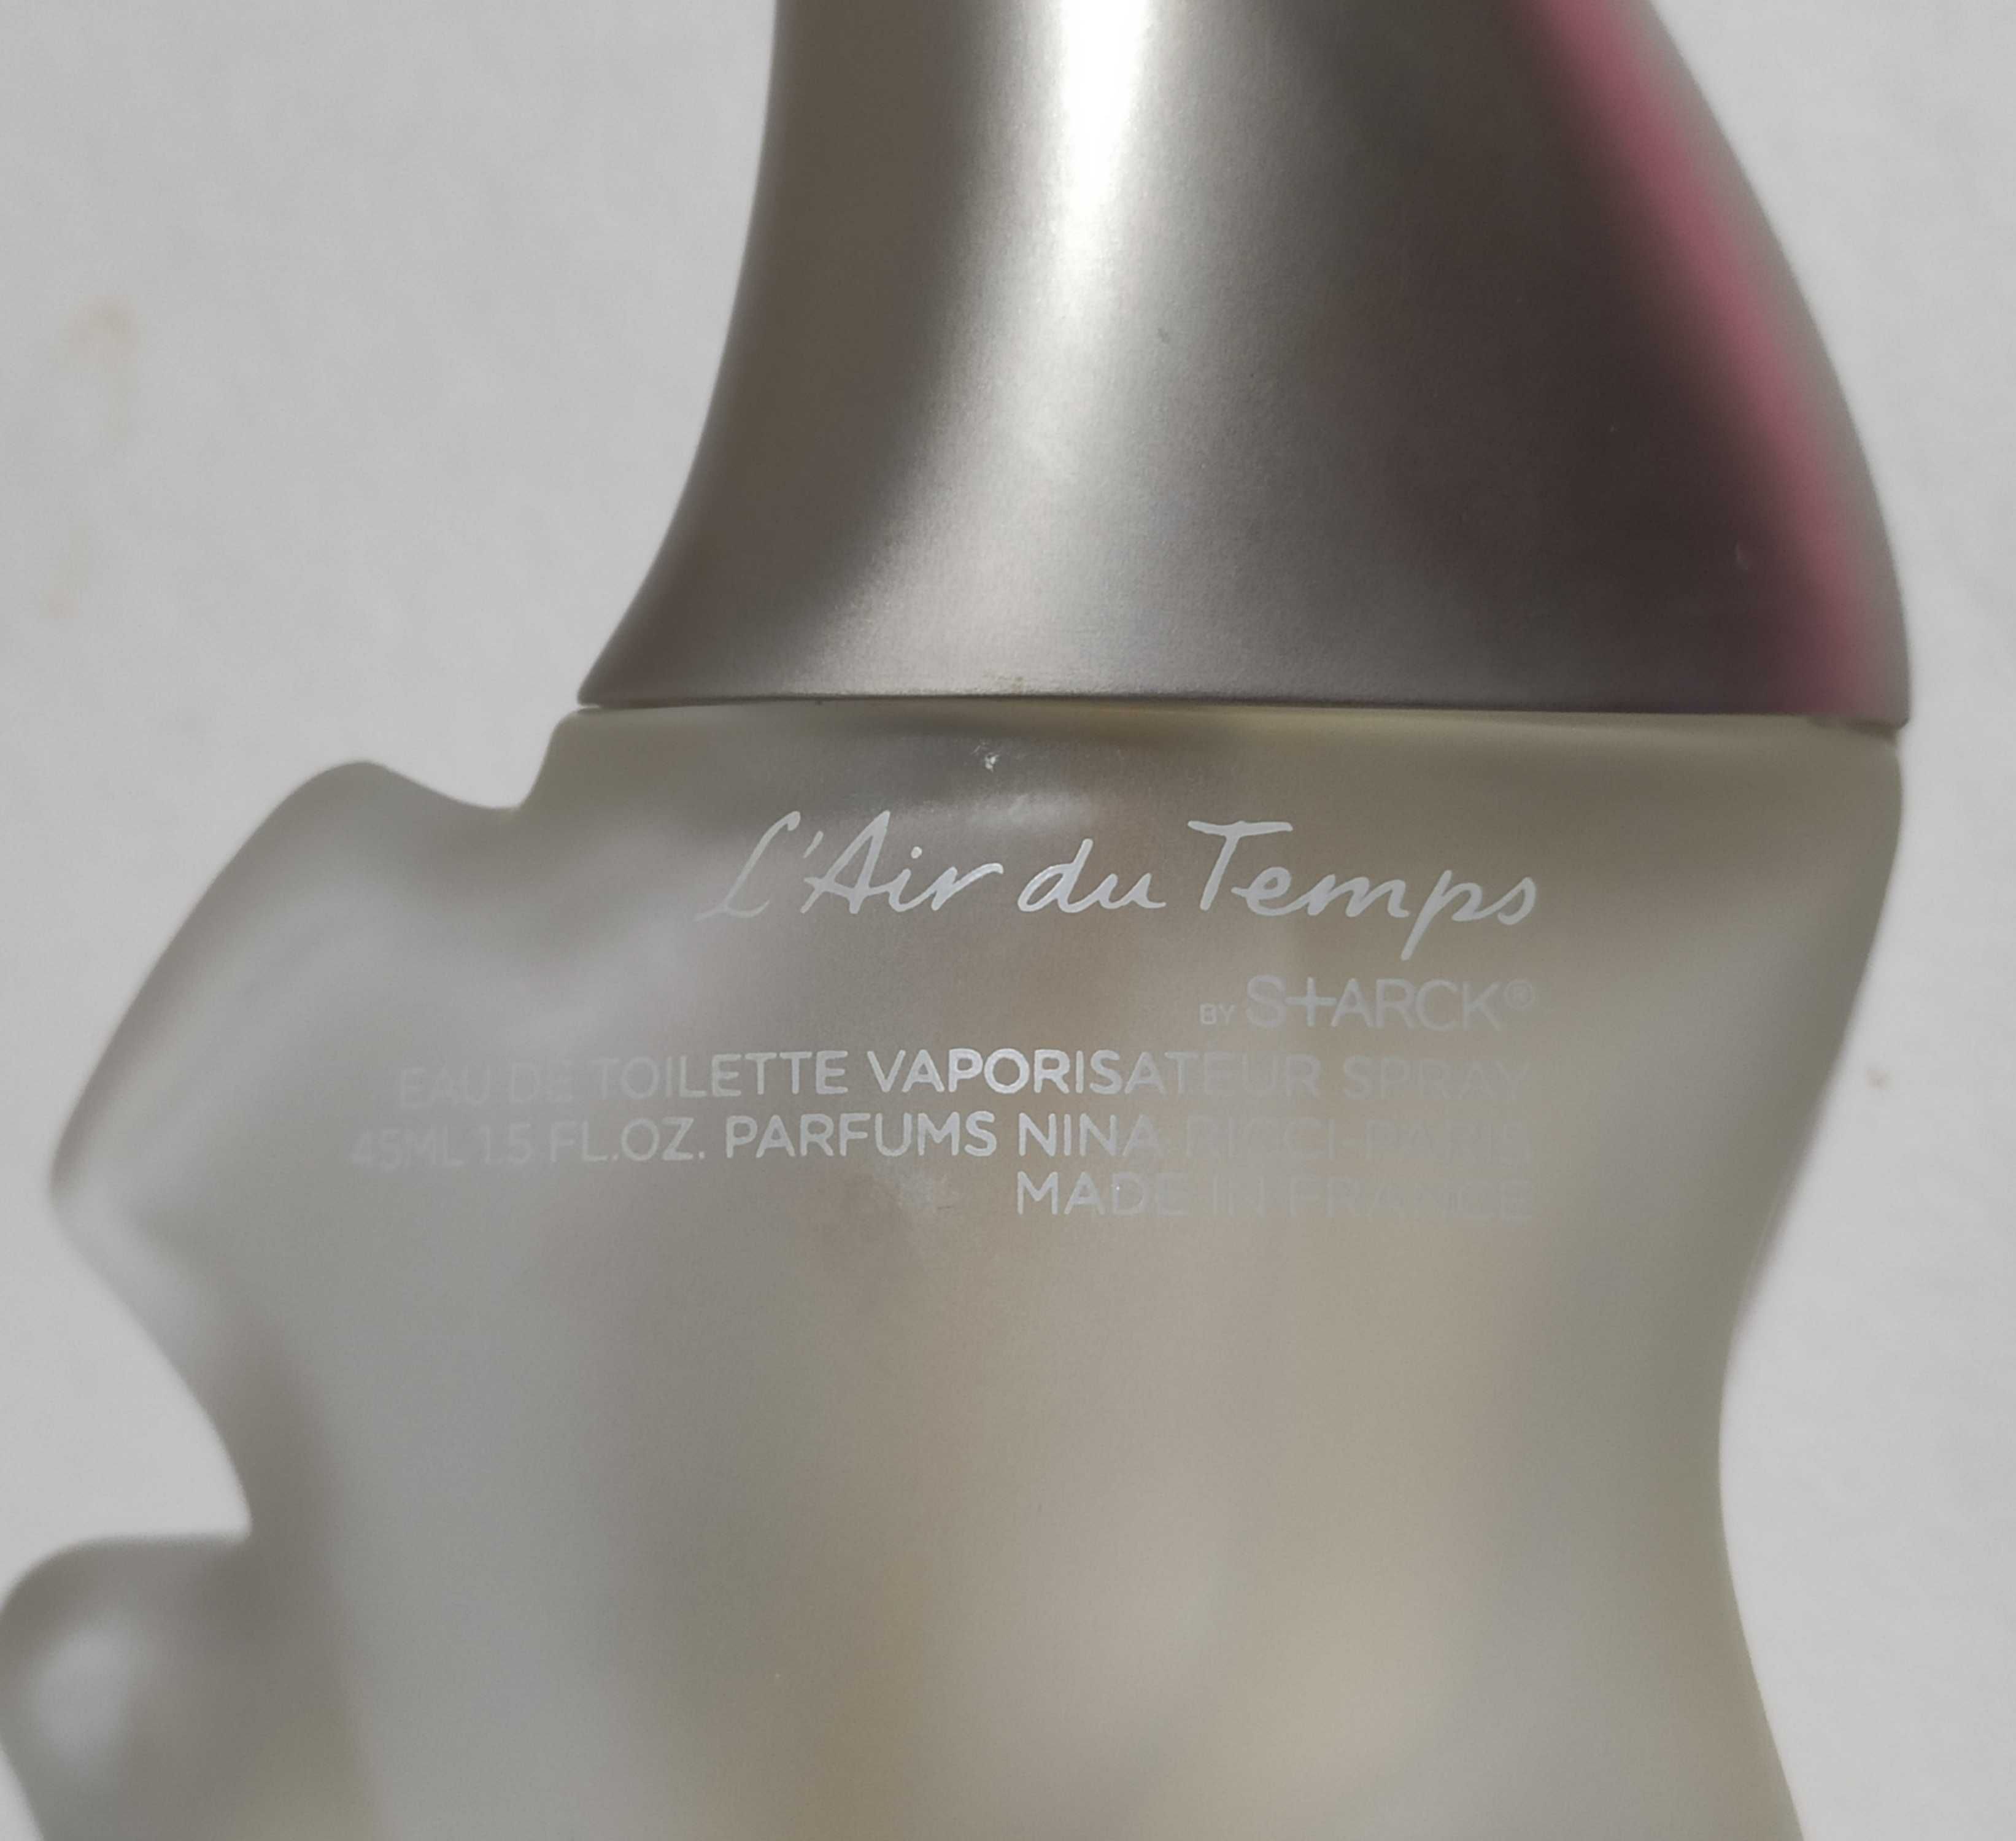 Nina Ricci L'air du Temps by Starck Limited edition